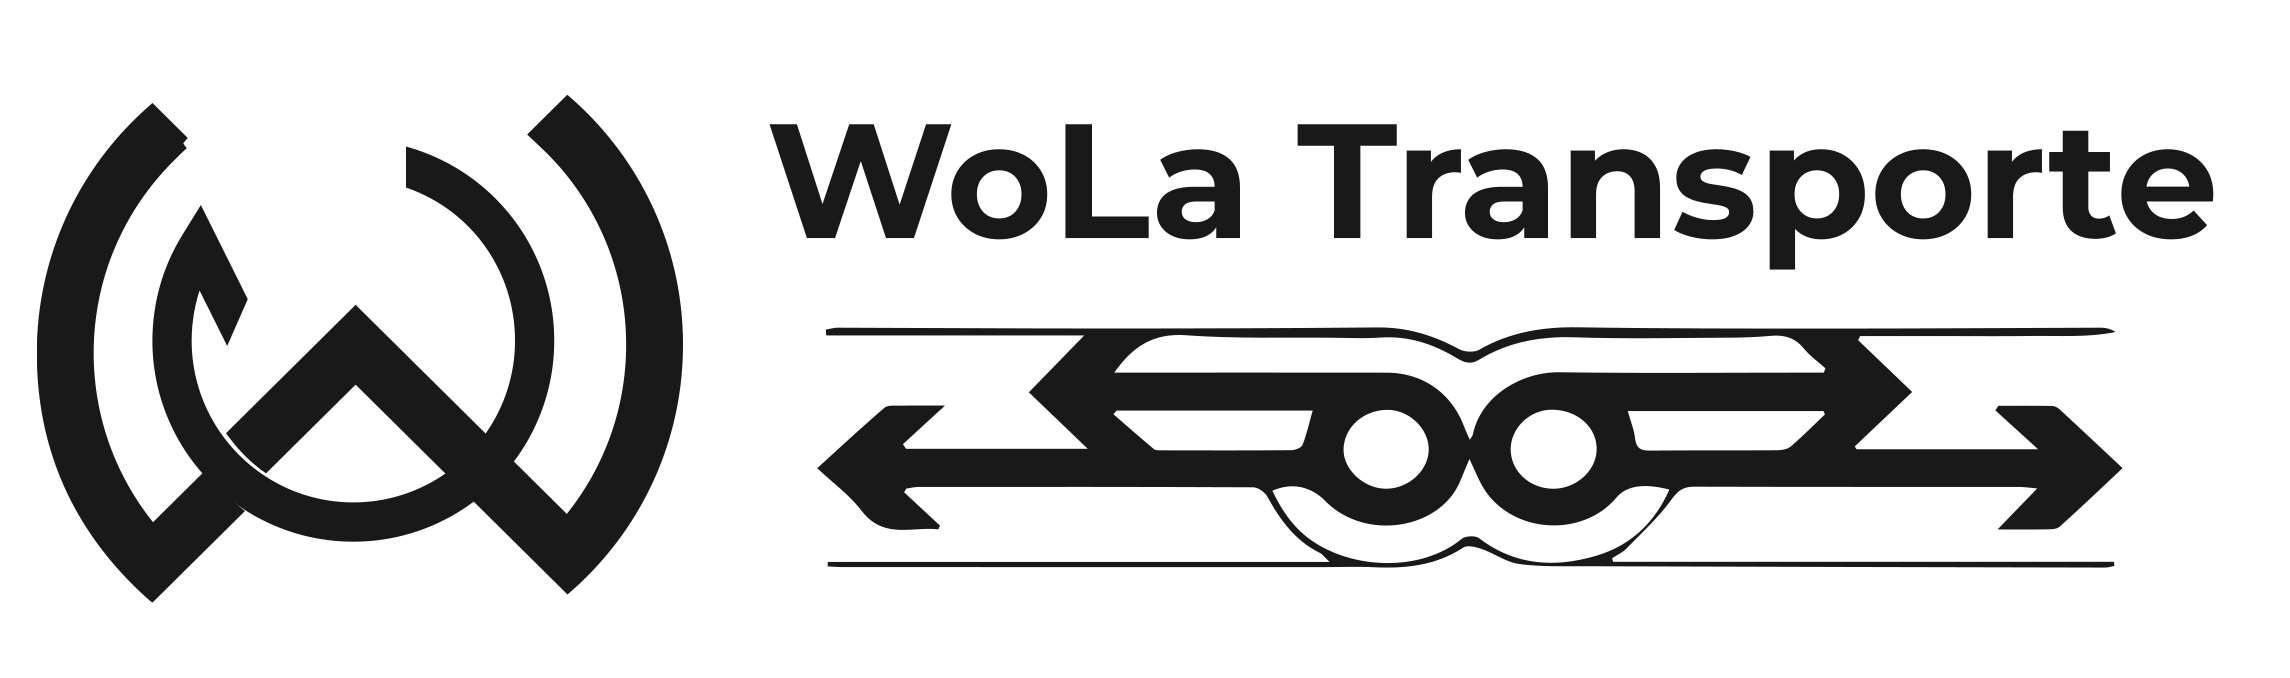 WoLa Transporte